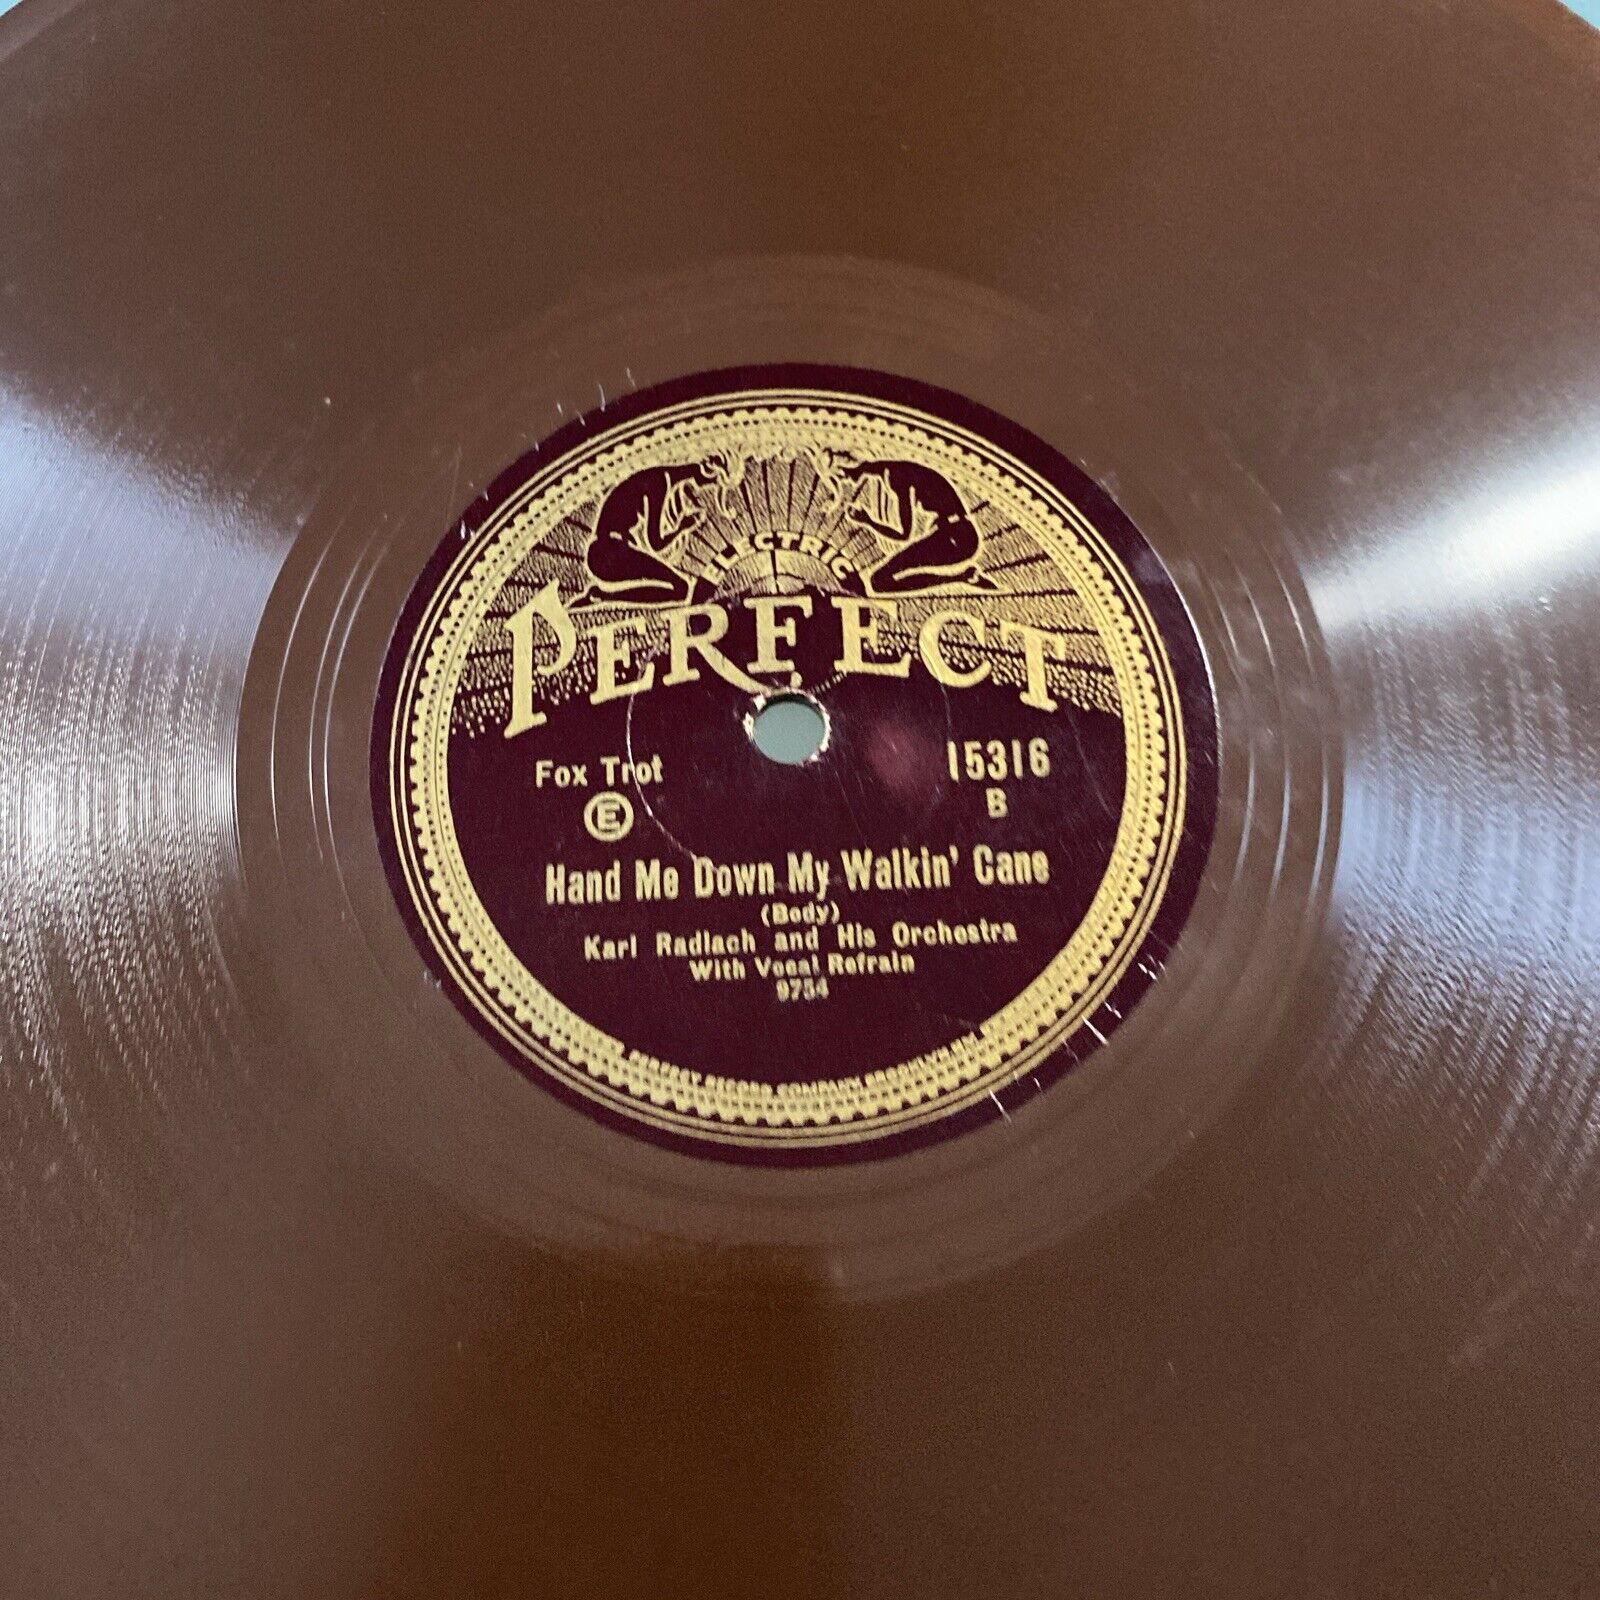 PREWAR JAZZ Karl Radlach 78 rpm PERFECT 15316 Hand Me Down My Walkin Cane 1930 E